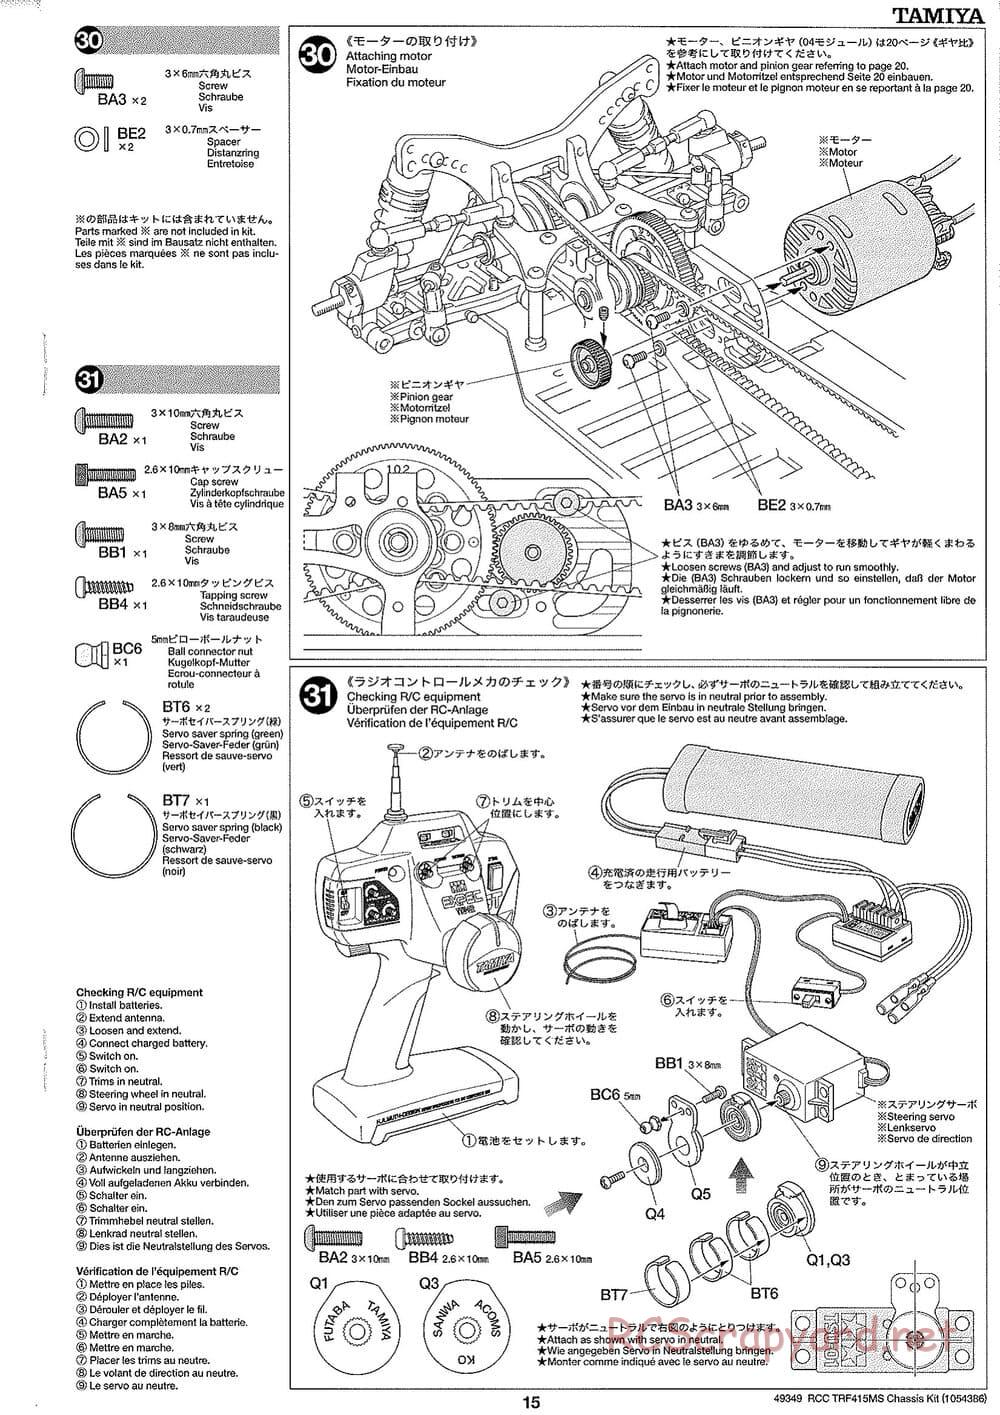 Tamiya - TRF415-MS Chassis - Manual - Page 15